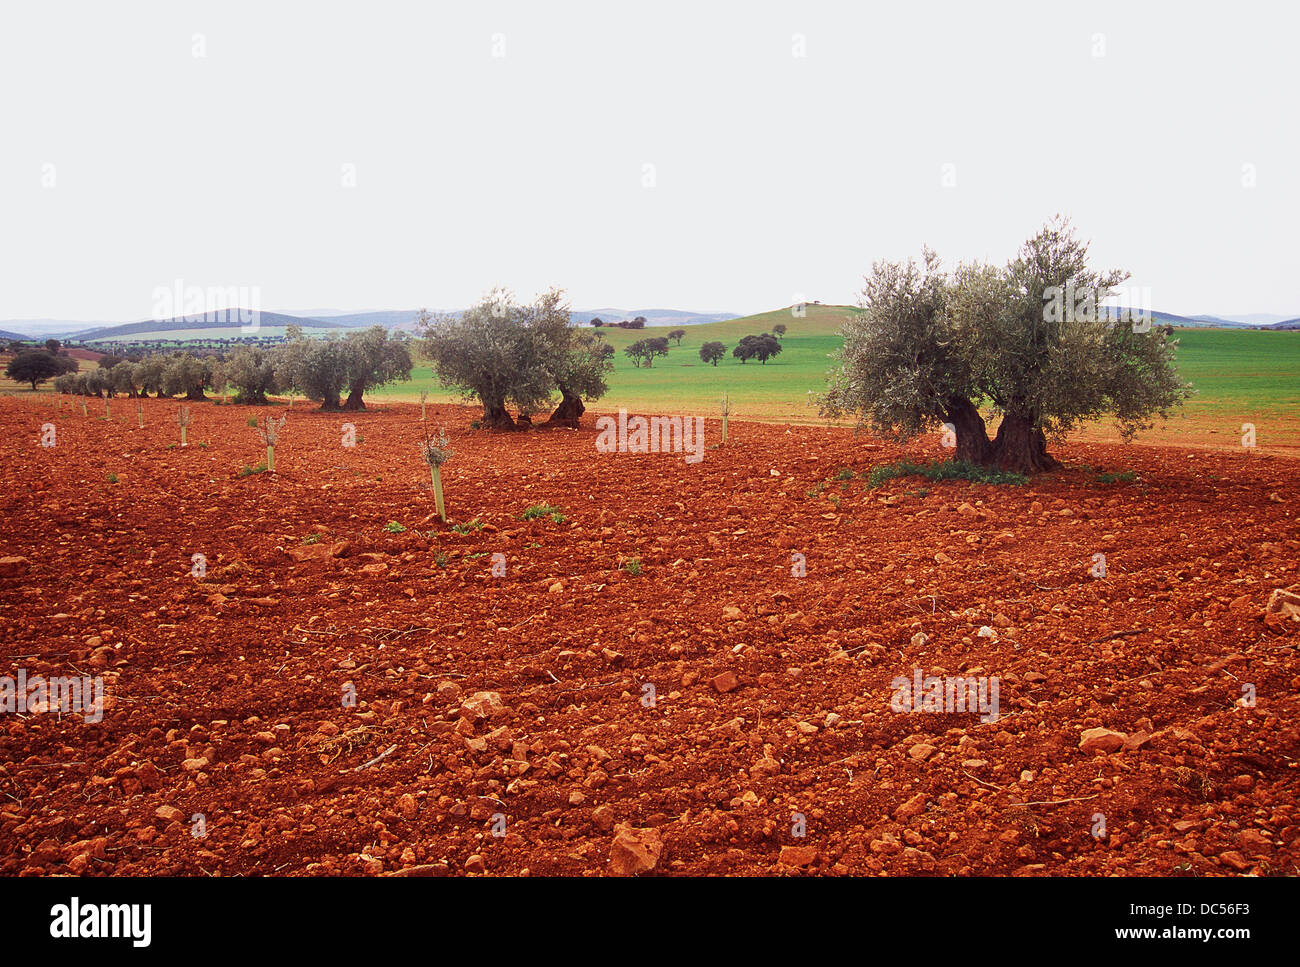 Olive trees in a cultivation field. Campo de Calatrava, Ciudad Real province, Castilla La Mancha, Spain. Stock Photo